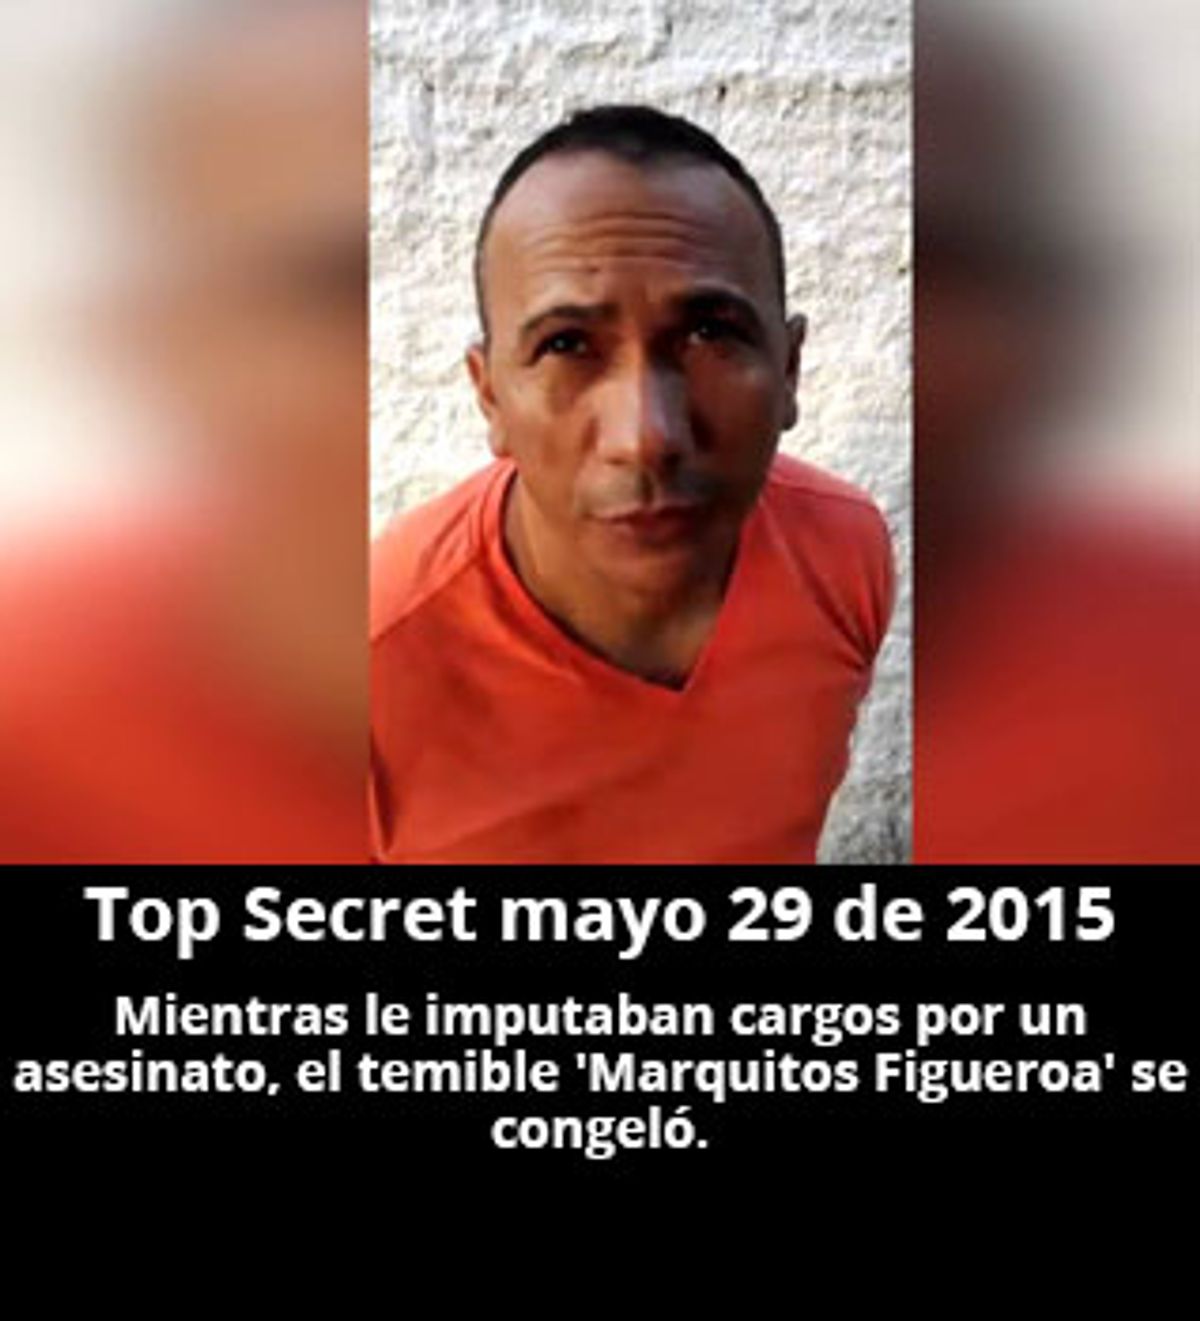 Top Secret mayo 29 de 2016